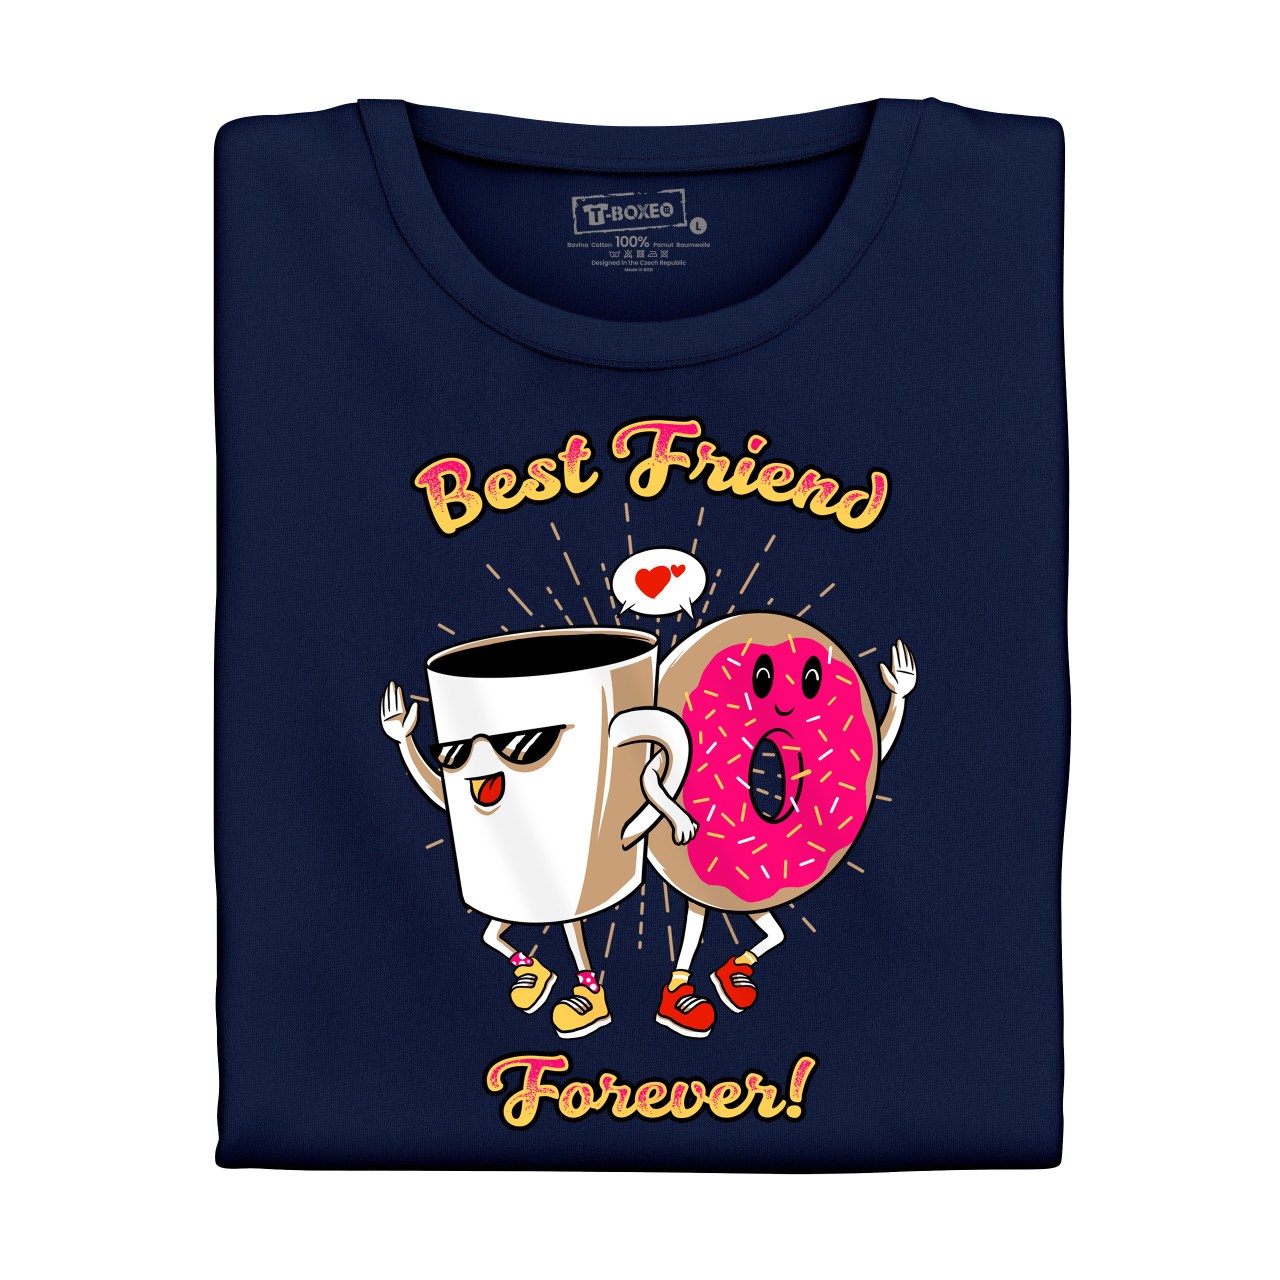 Dámské tričko “BFFs kafe a kobliha”